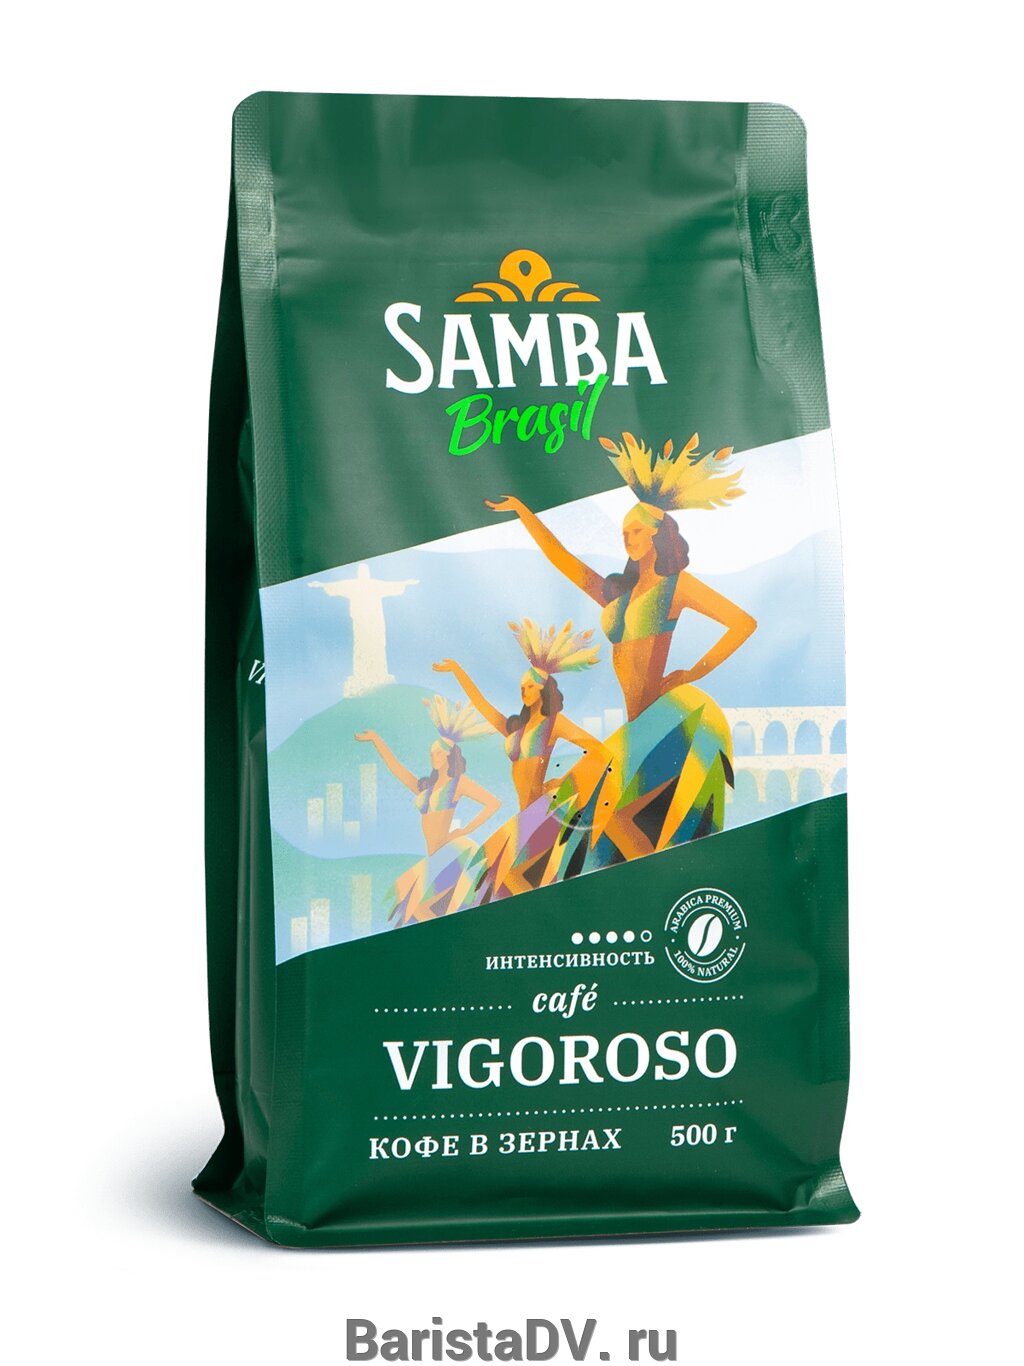 Кофе в зернах - Samba Vigoroso (Самба Вигоросо) 500 гр в/у от компании BaristaDV. ru - фото 1